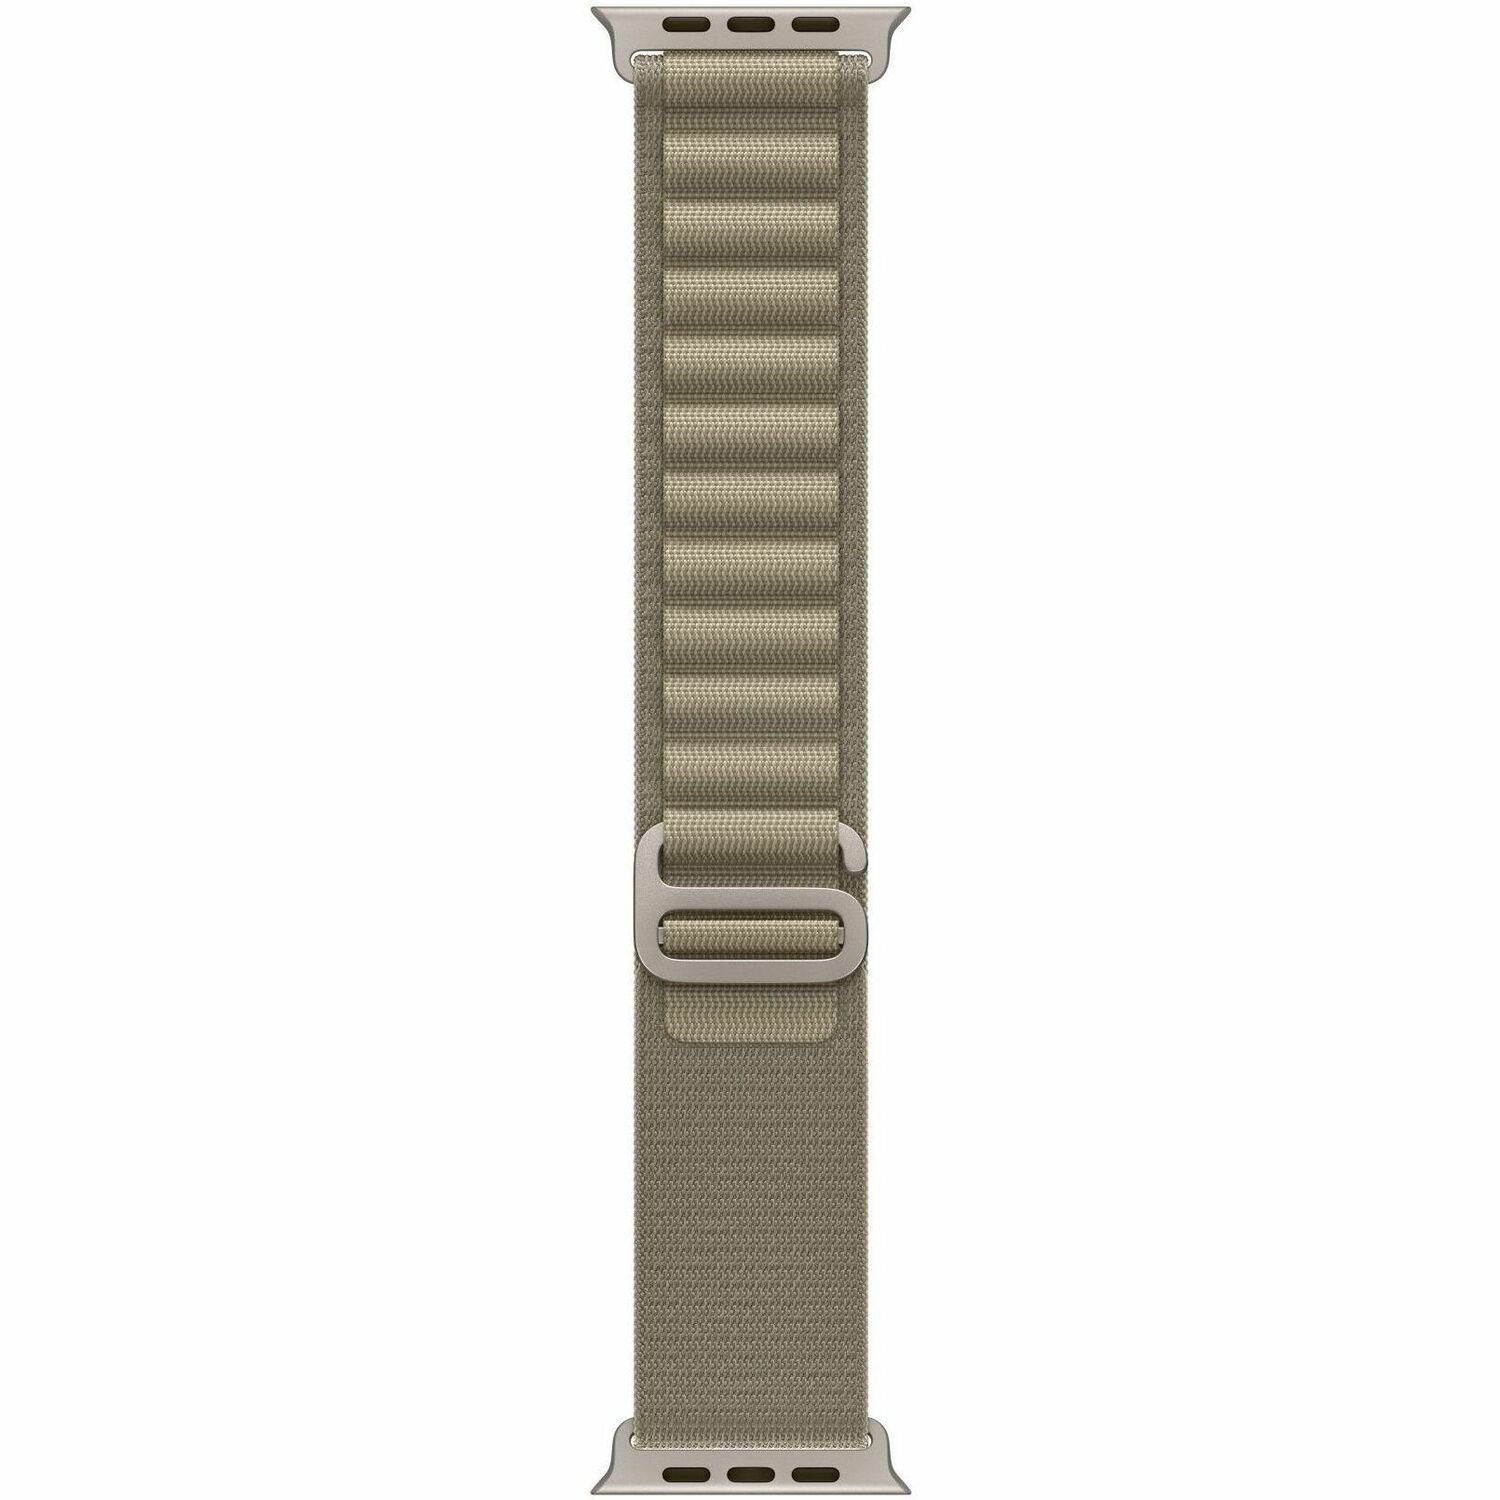 Apple Smartwatch Band